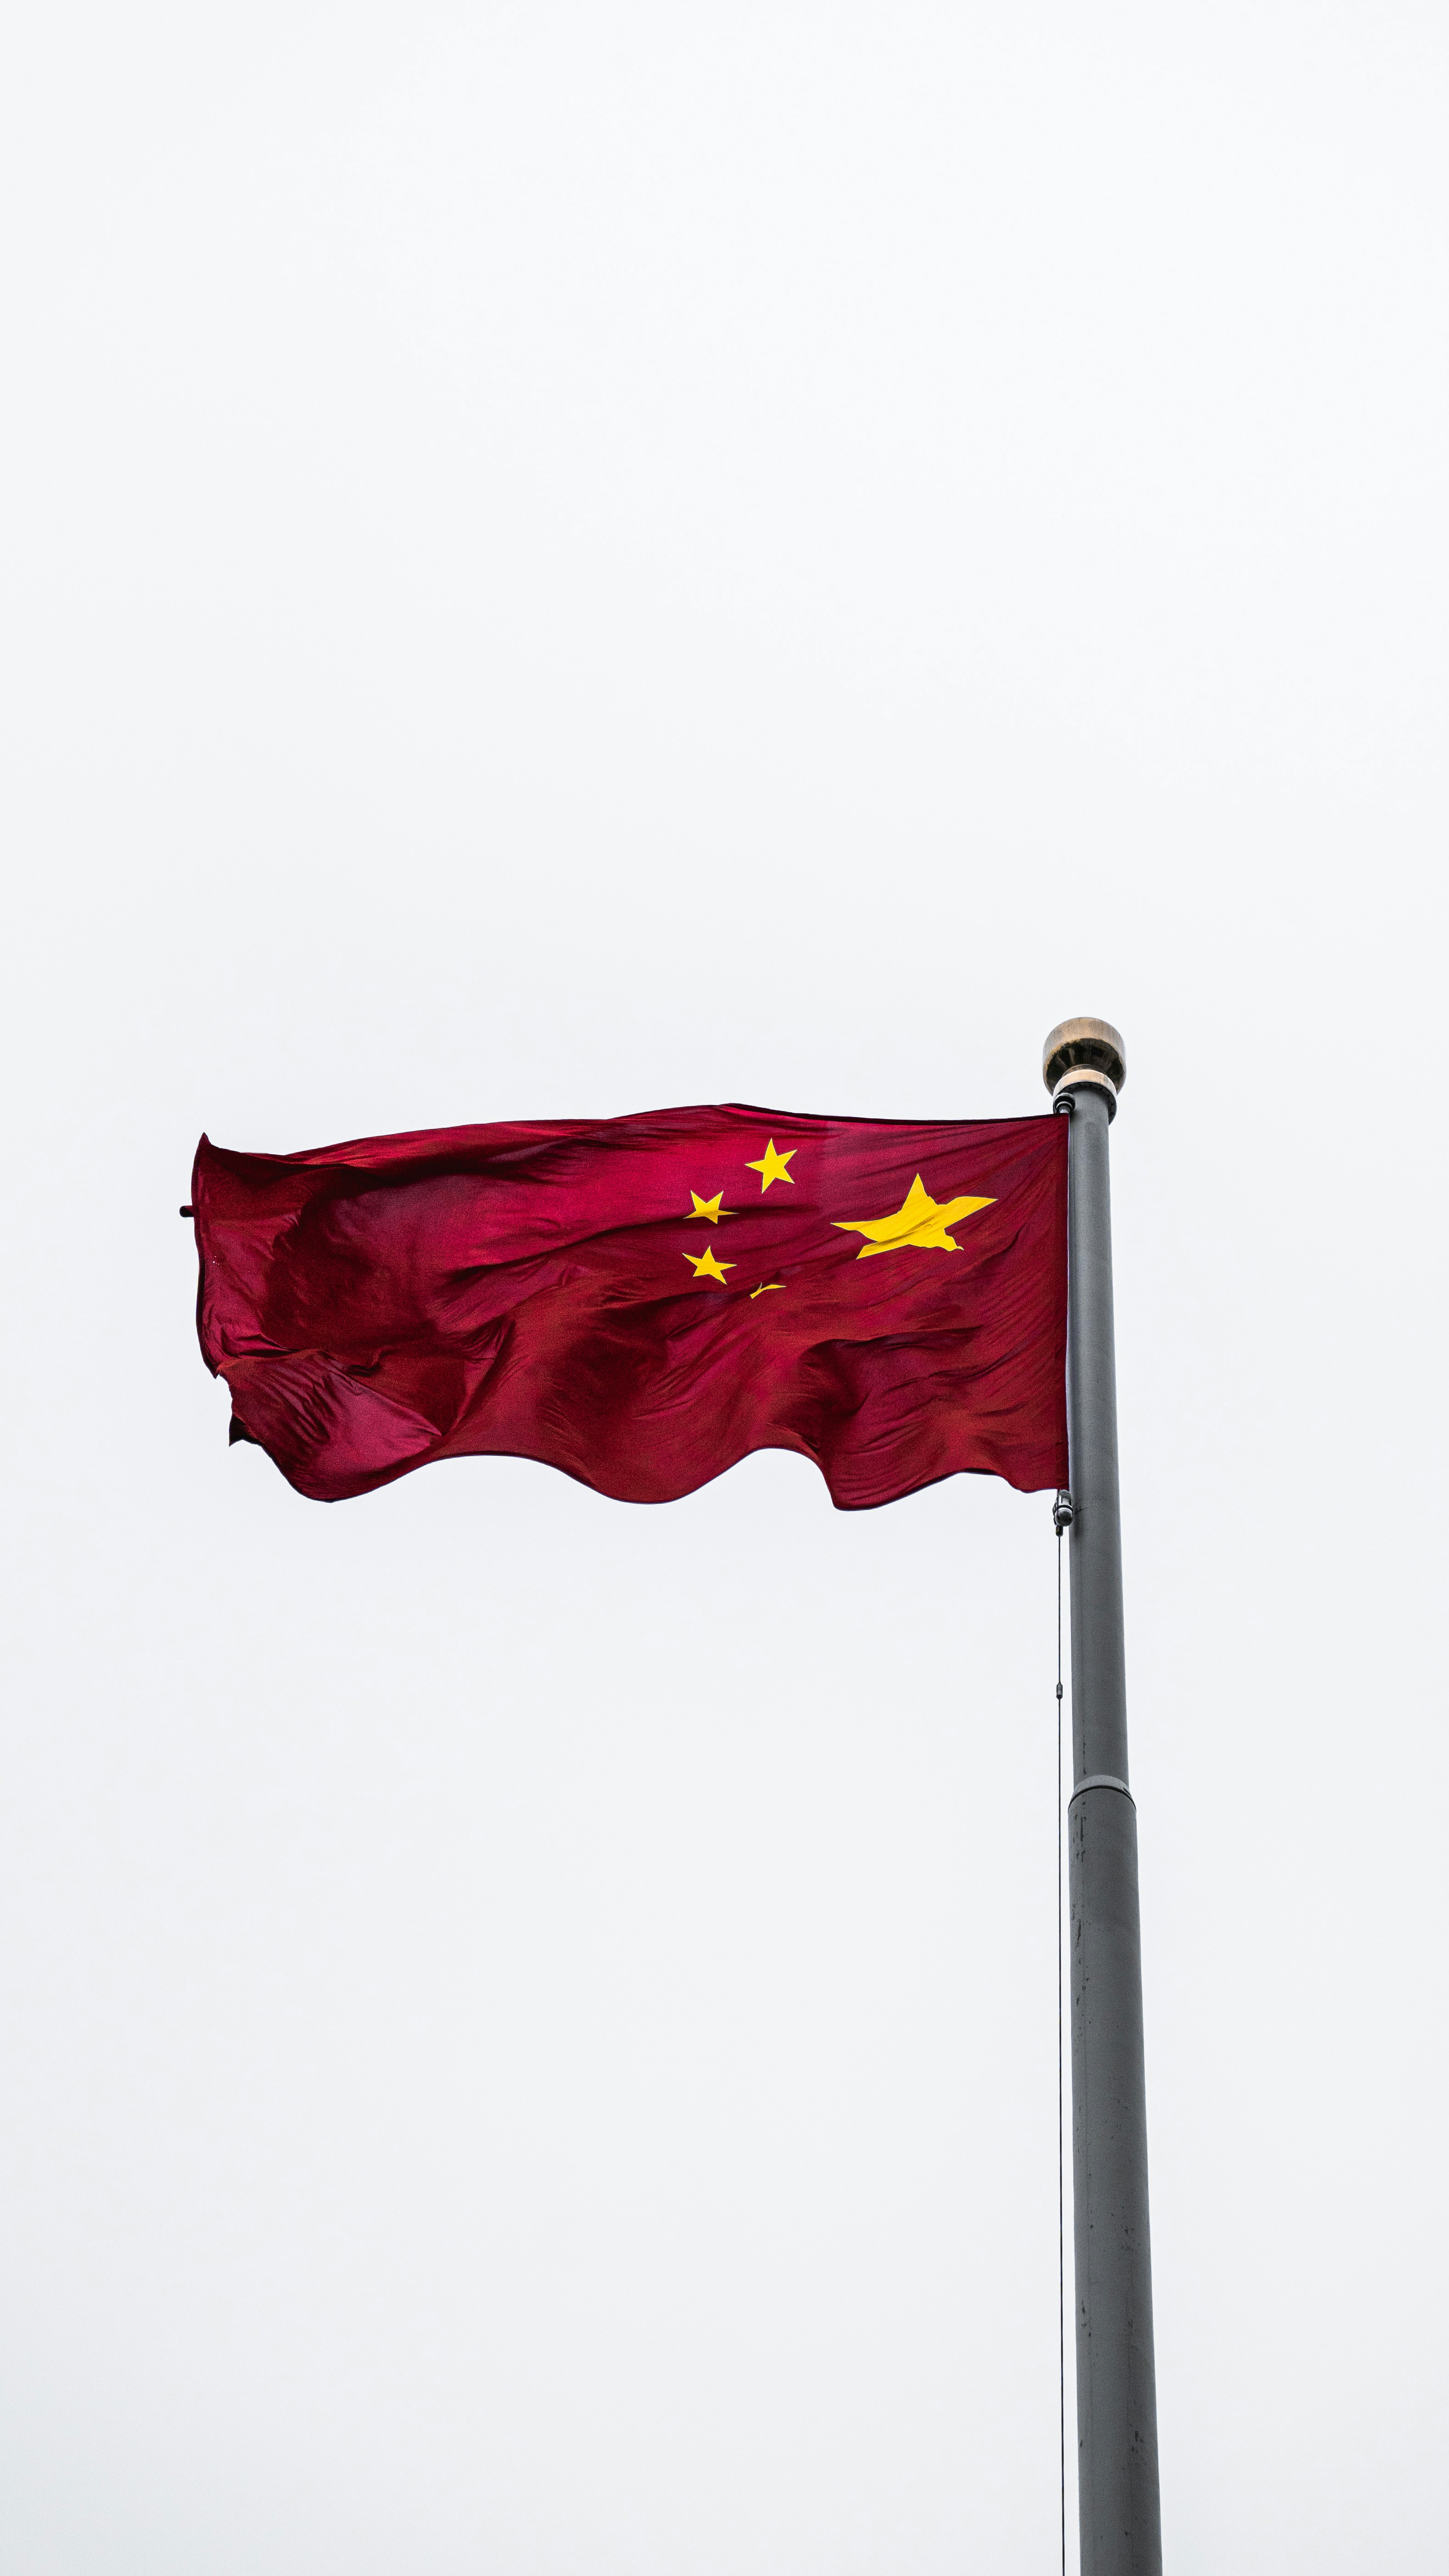 China's flag; image by Alejandro Luengo, via Unsplash.com.